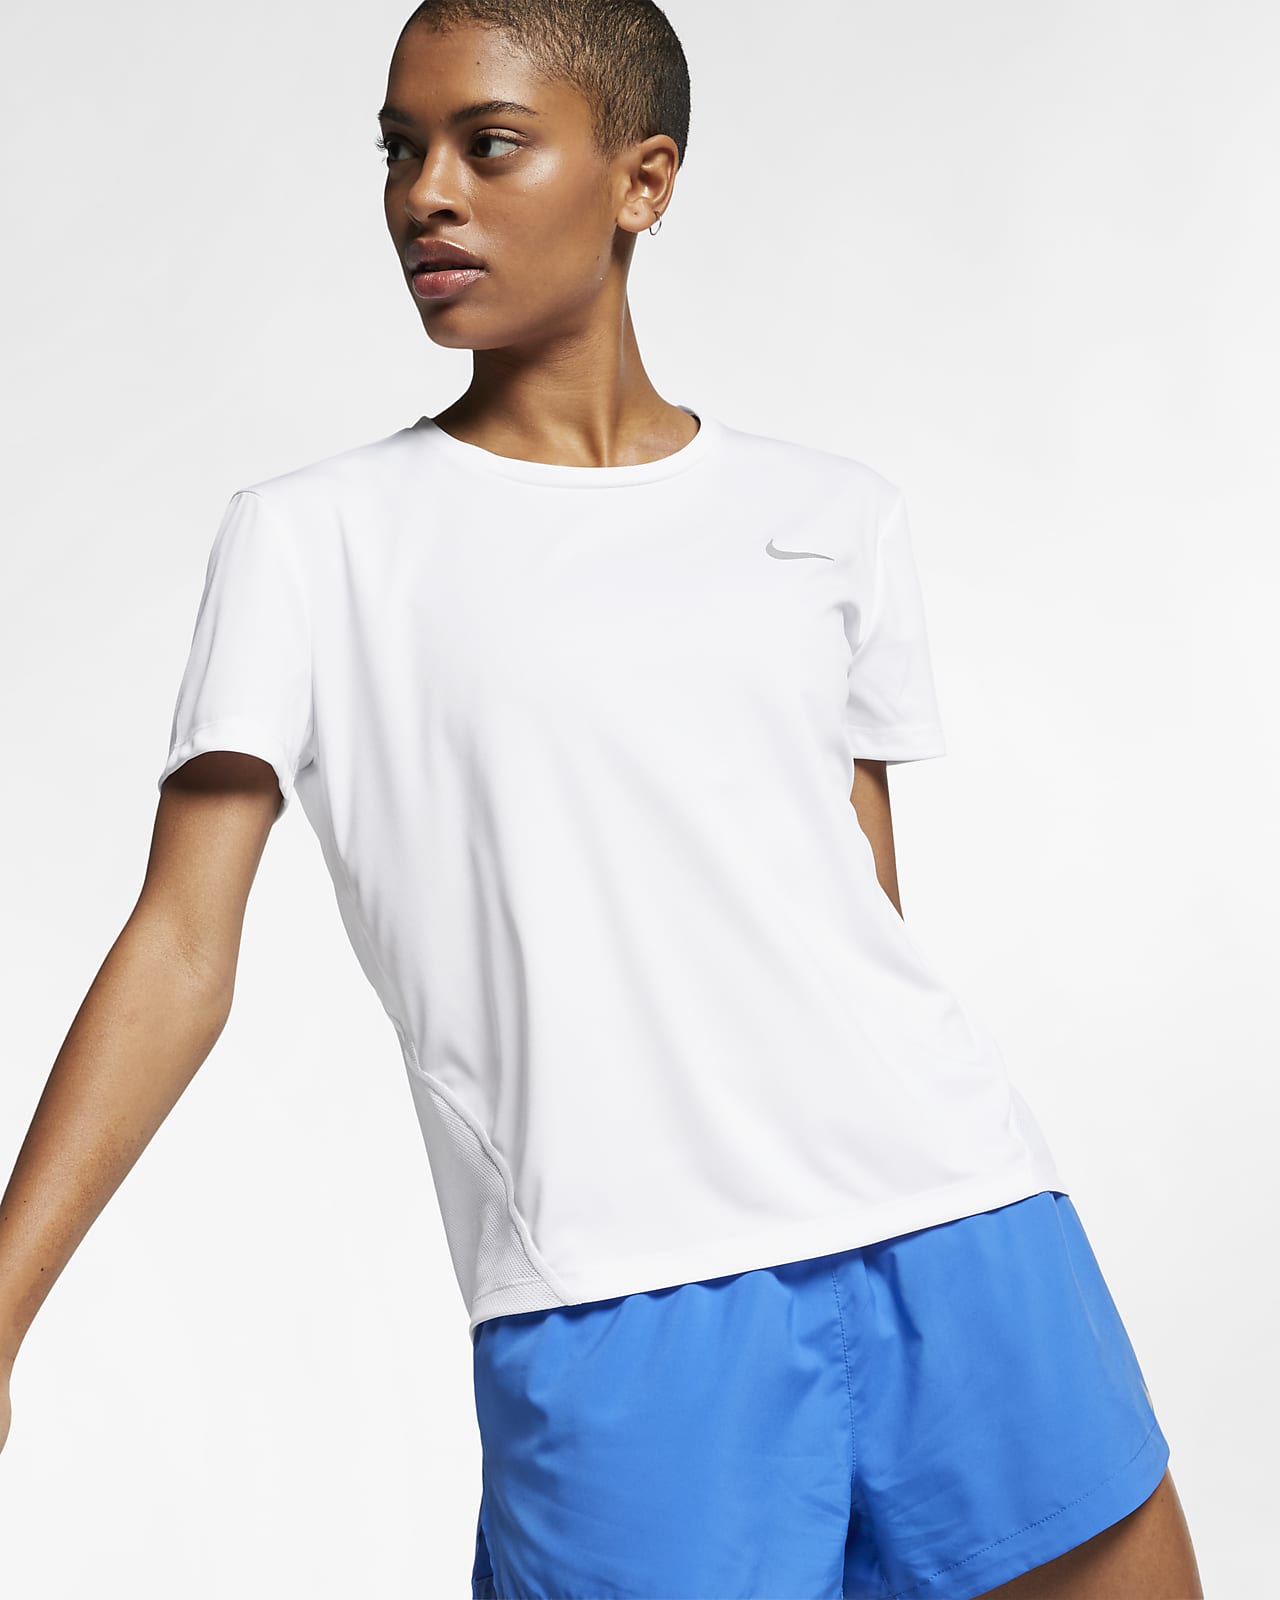 Nike Miler Women's Short-Sleeve Running Top